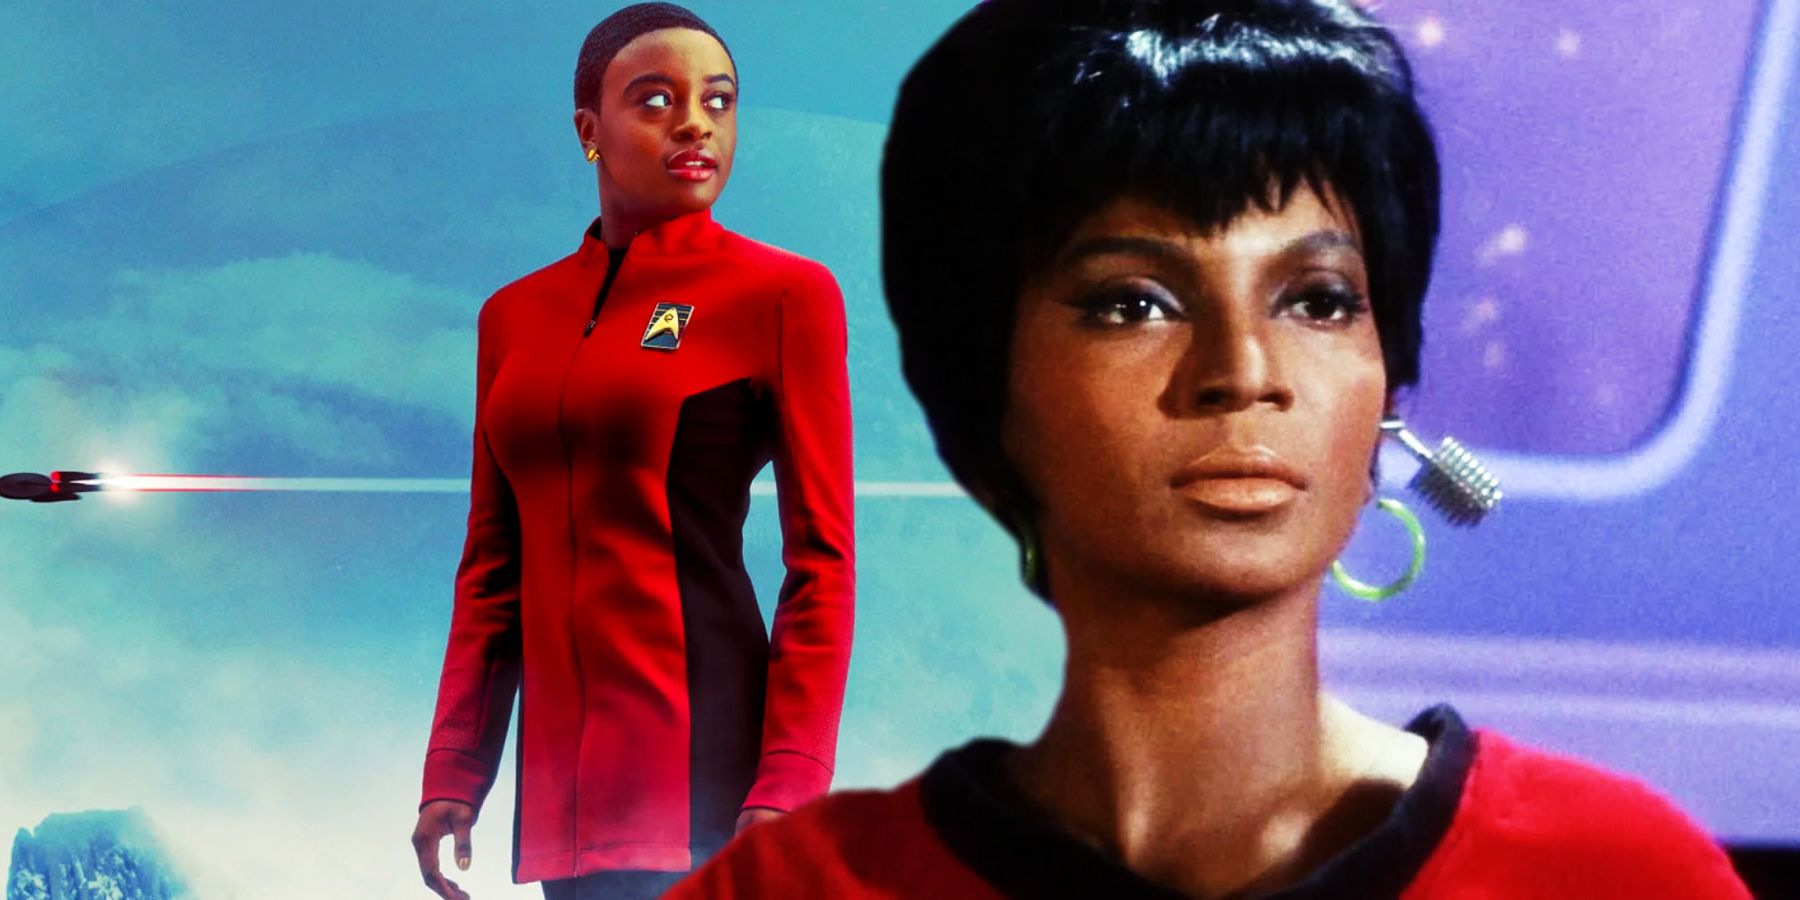 Celia Rose Gooding and Nichelle Nichols as Uhura in Star Trek.